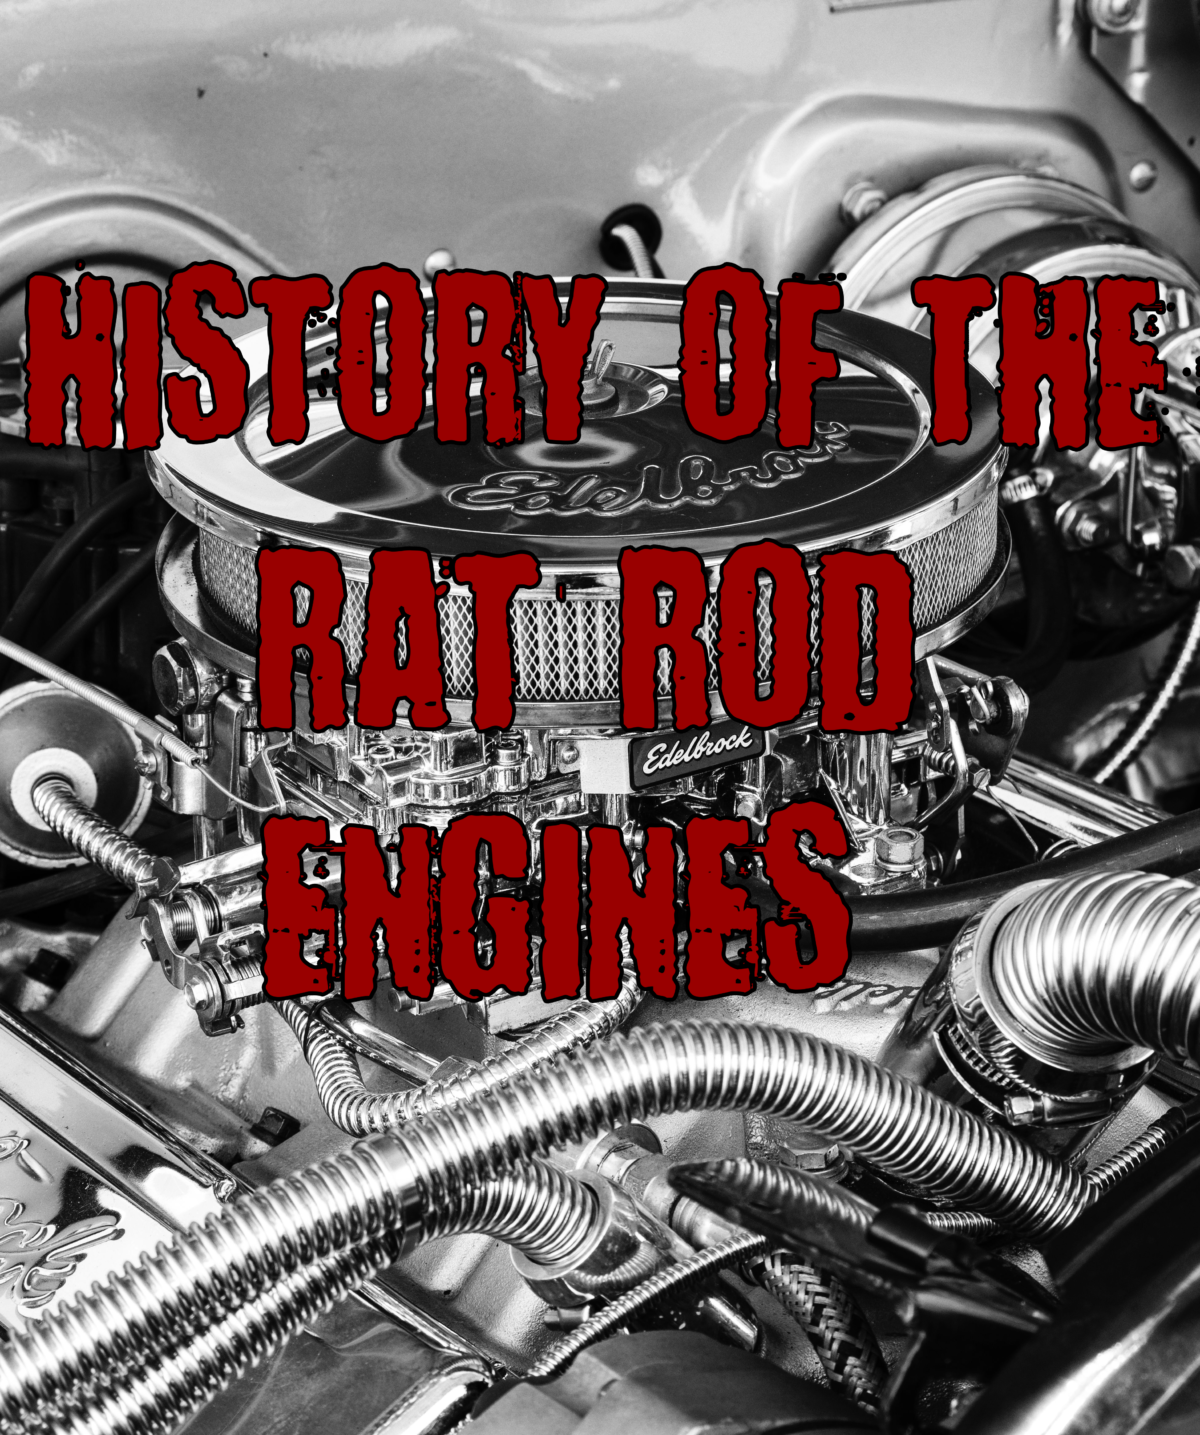 rat rod engines